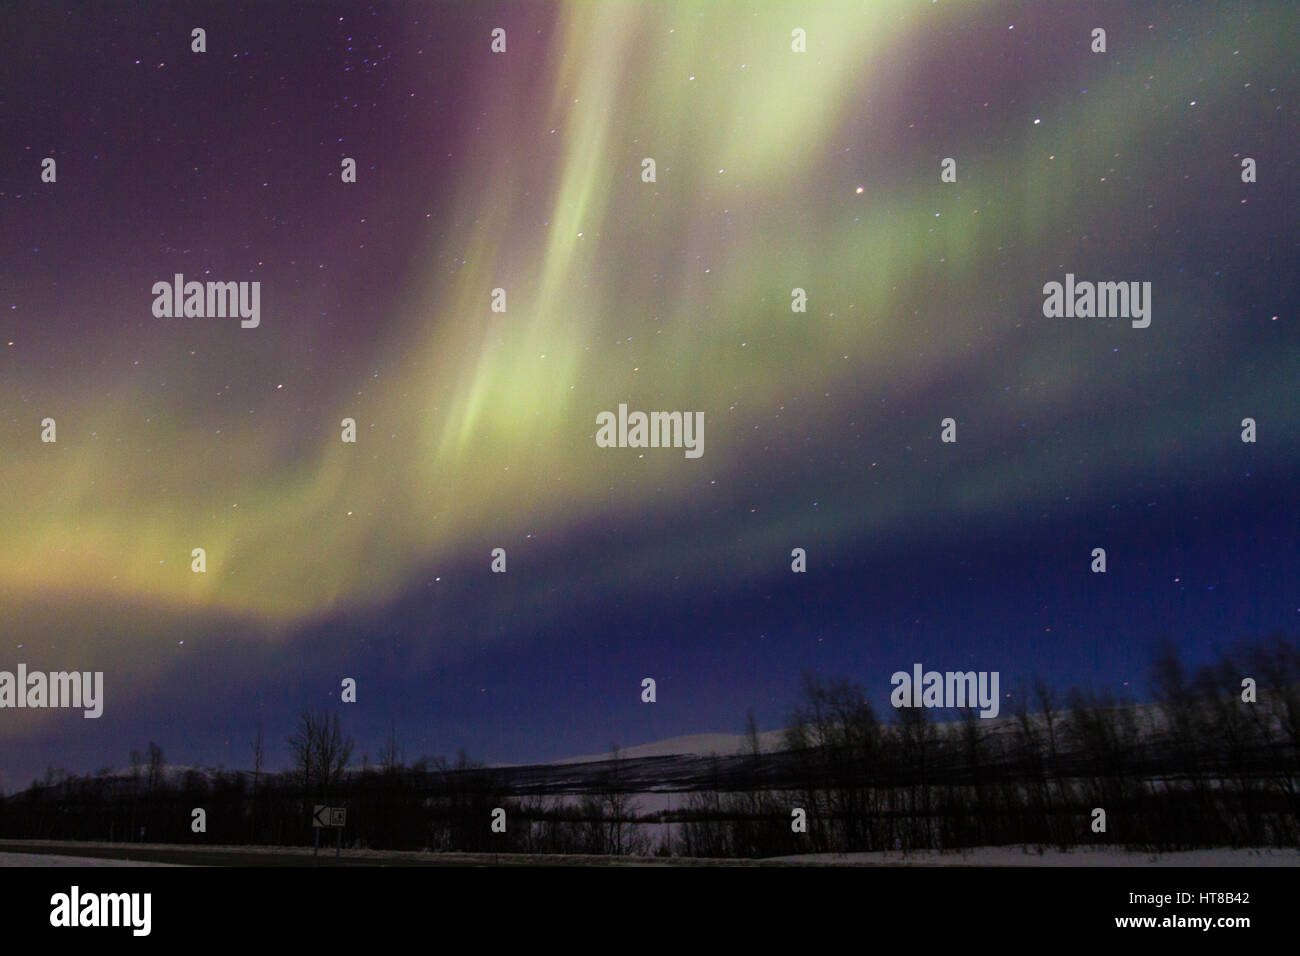 Northern light, Aurora borealis, mountains in background, auroa are violett, green, winter season, Kiruna, Swedish Lapland, Sweden Stock Photo